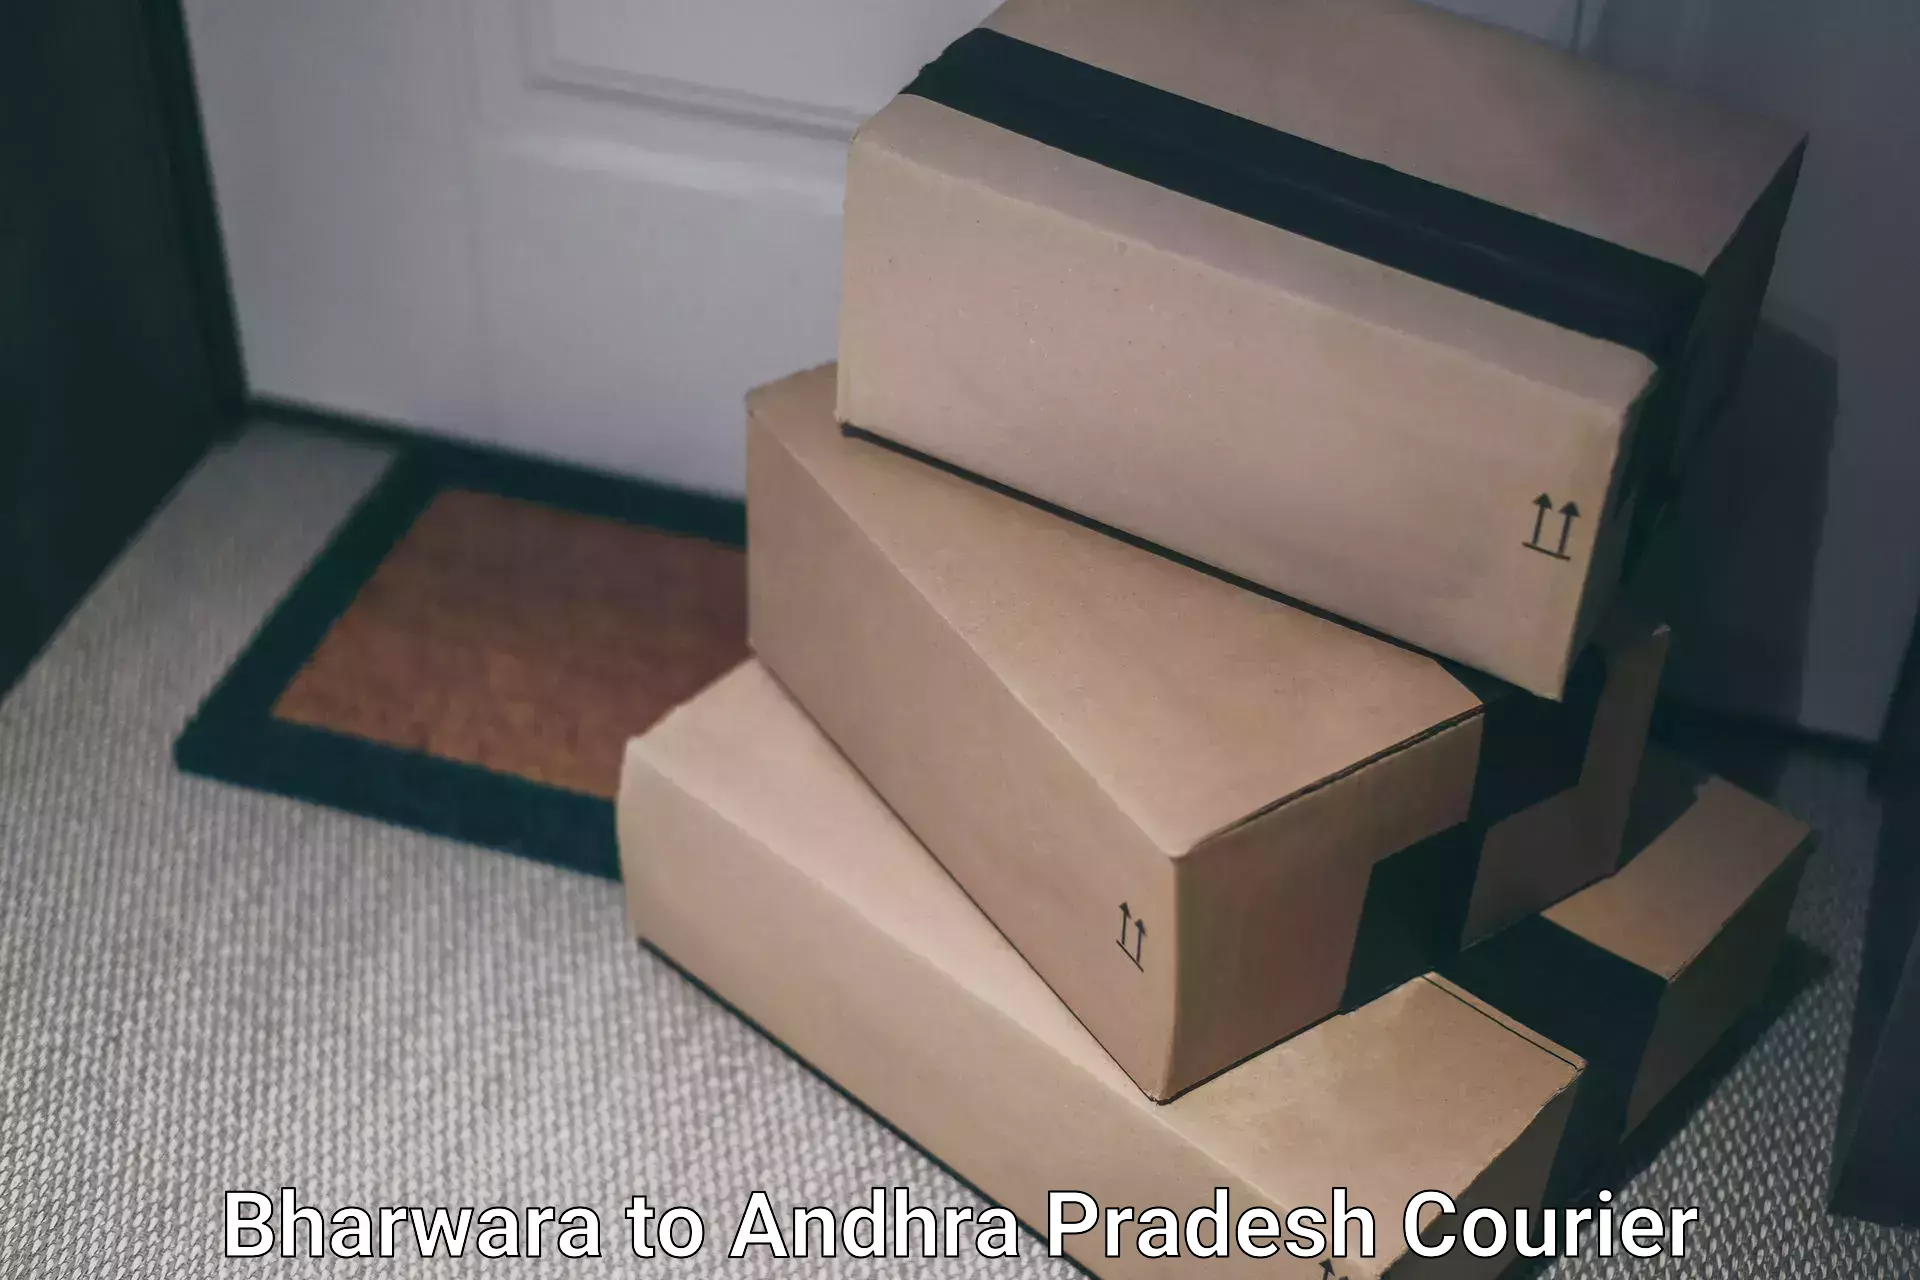 Global courier networks Bharwara to Konduru